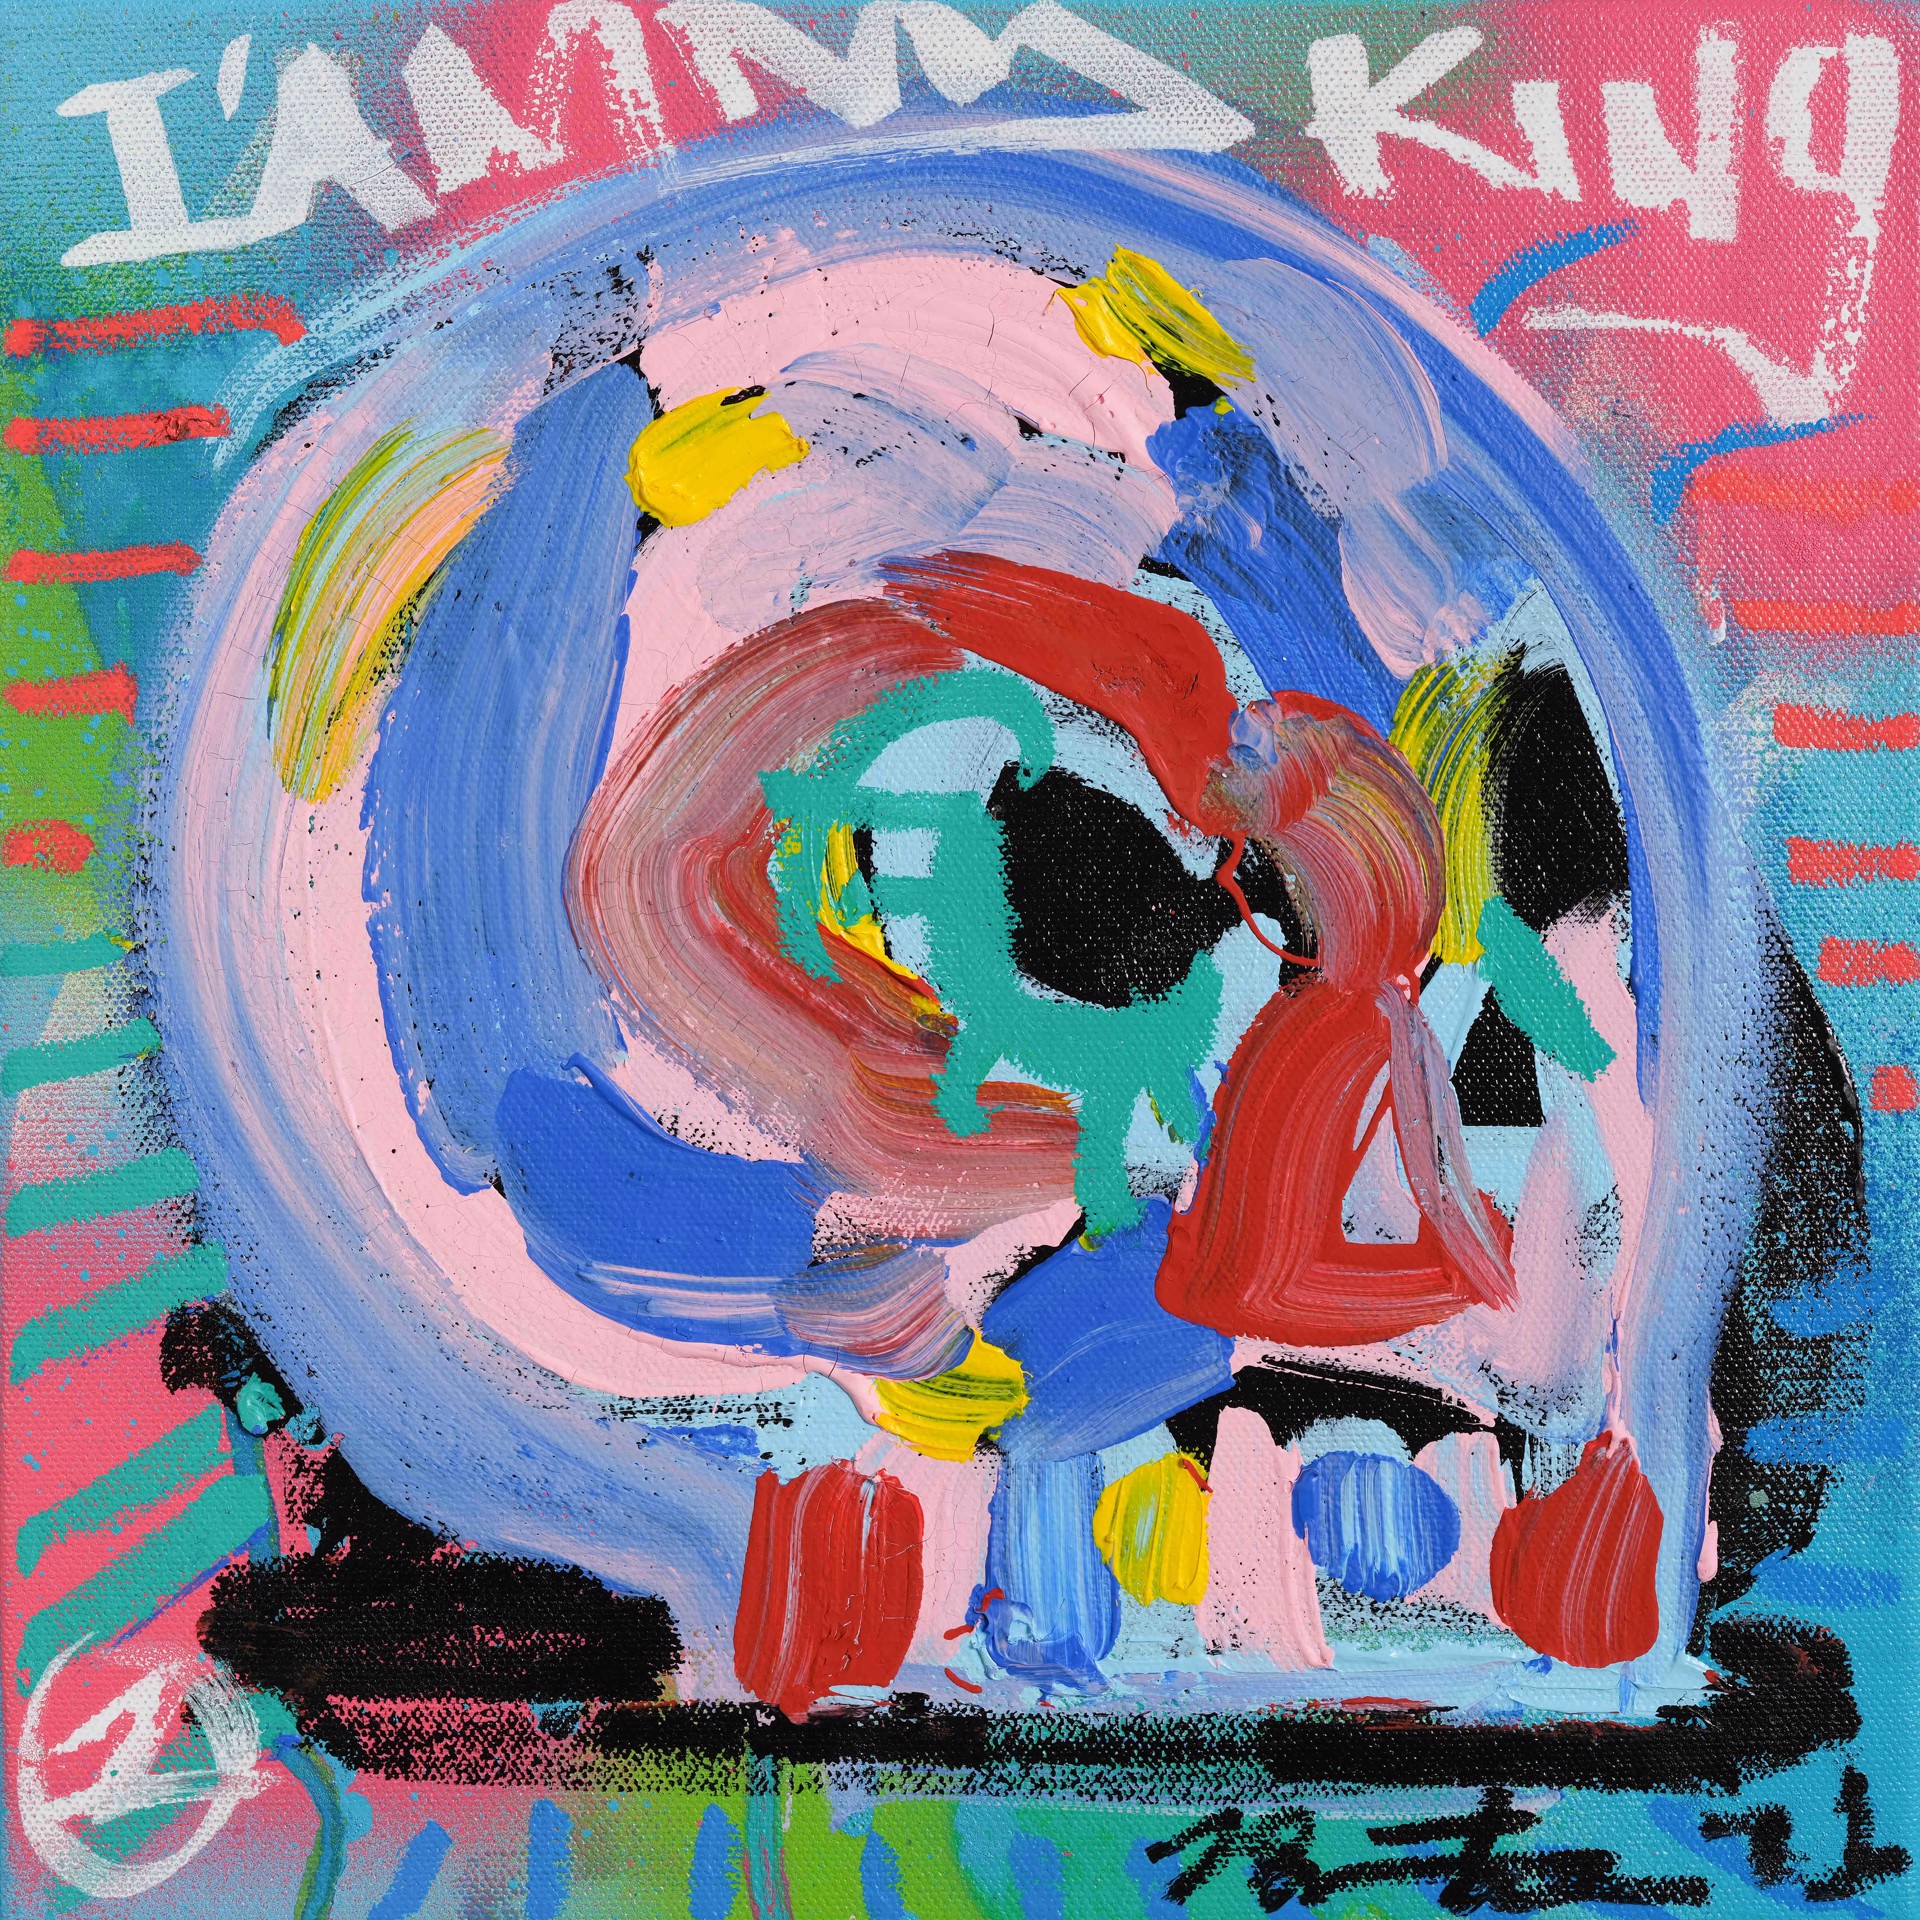 I am King II by Bradley Theodore